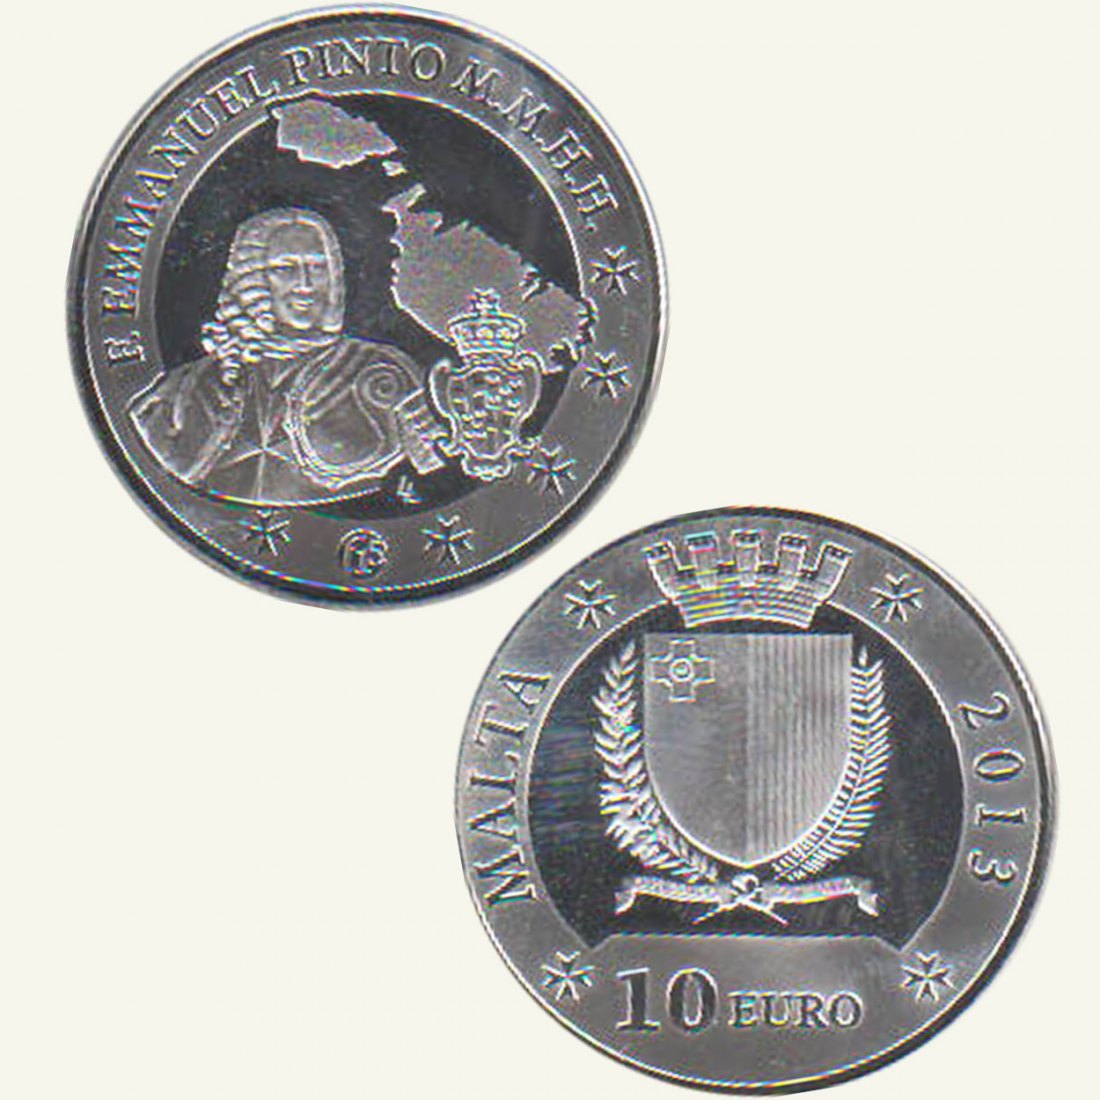  Offiz. 10-Euro-Silbermünze Malta *Manuel Pinto da Fonseca* 2013 *PP* max 5.000St!   